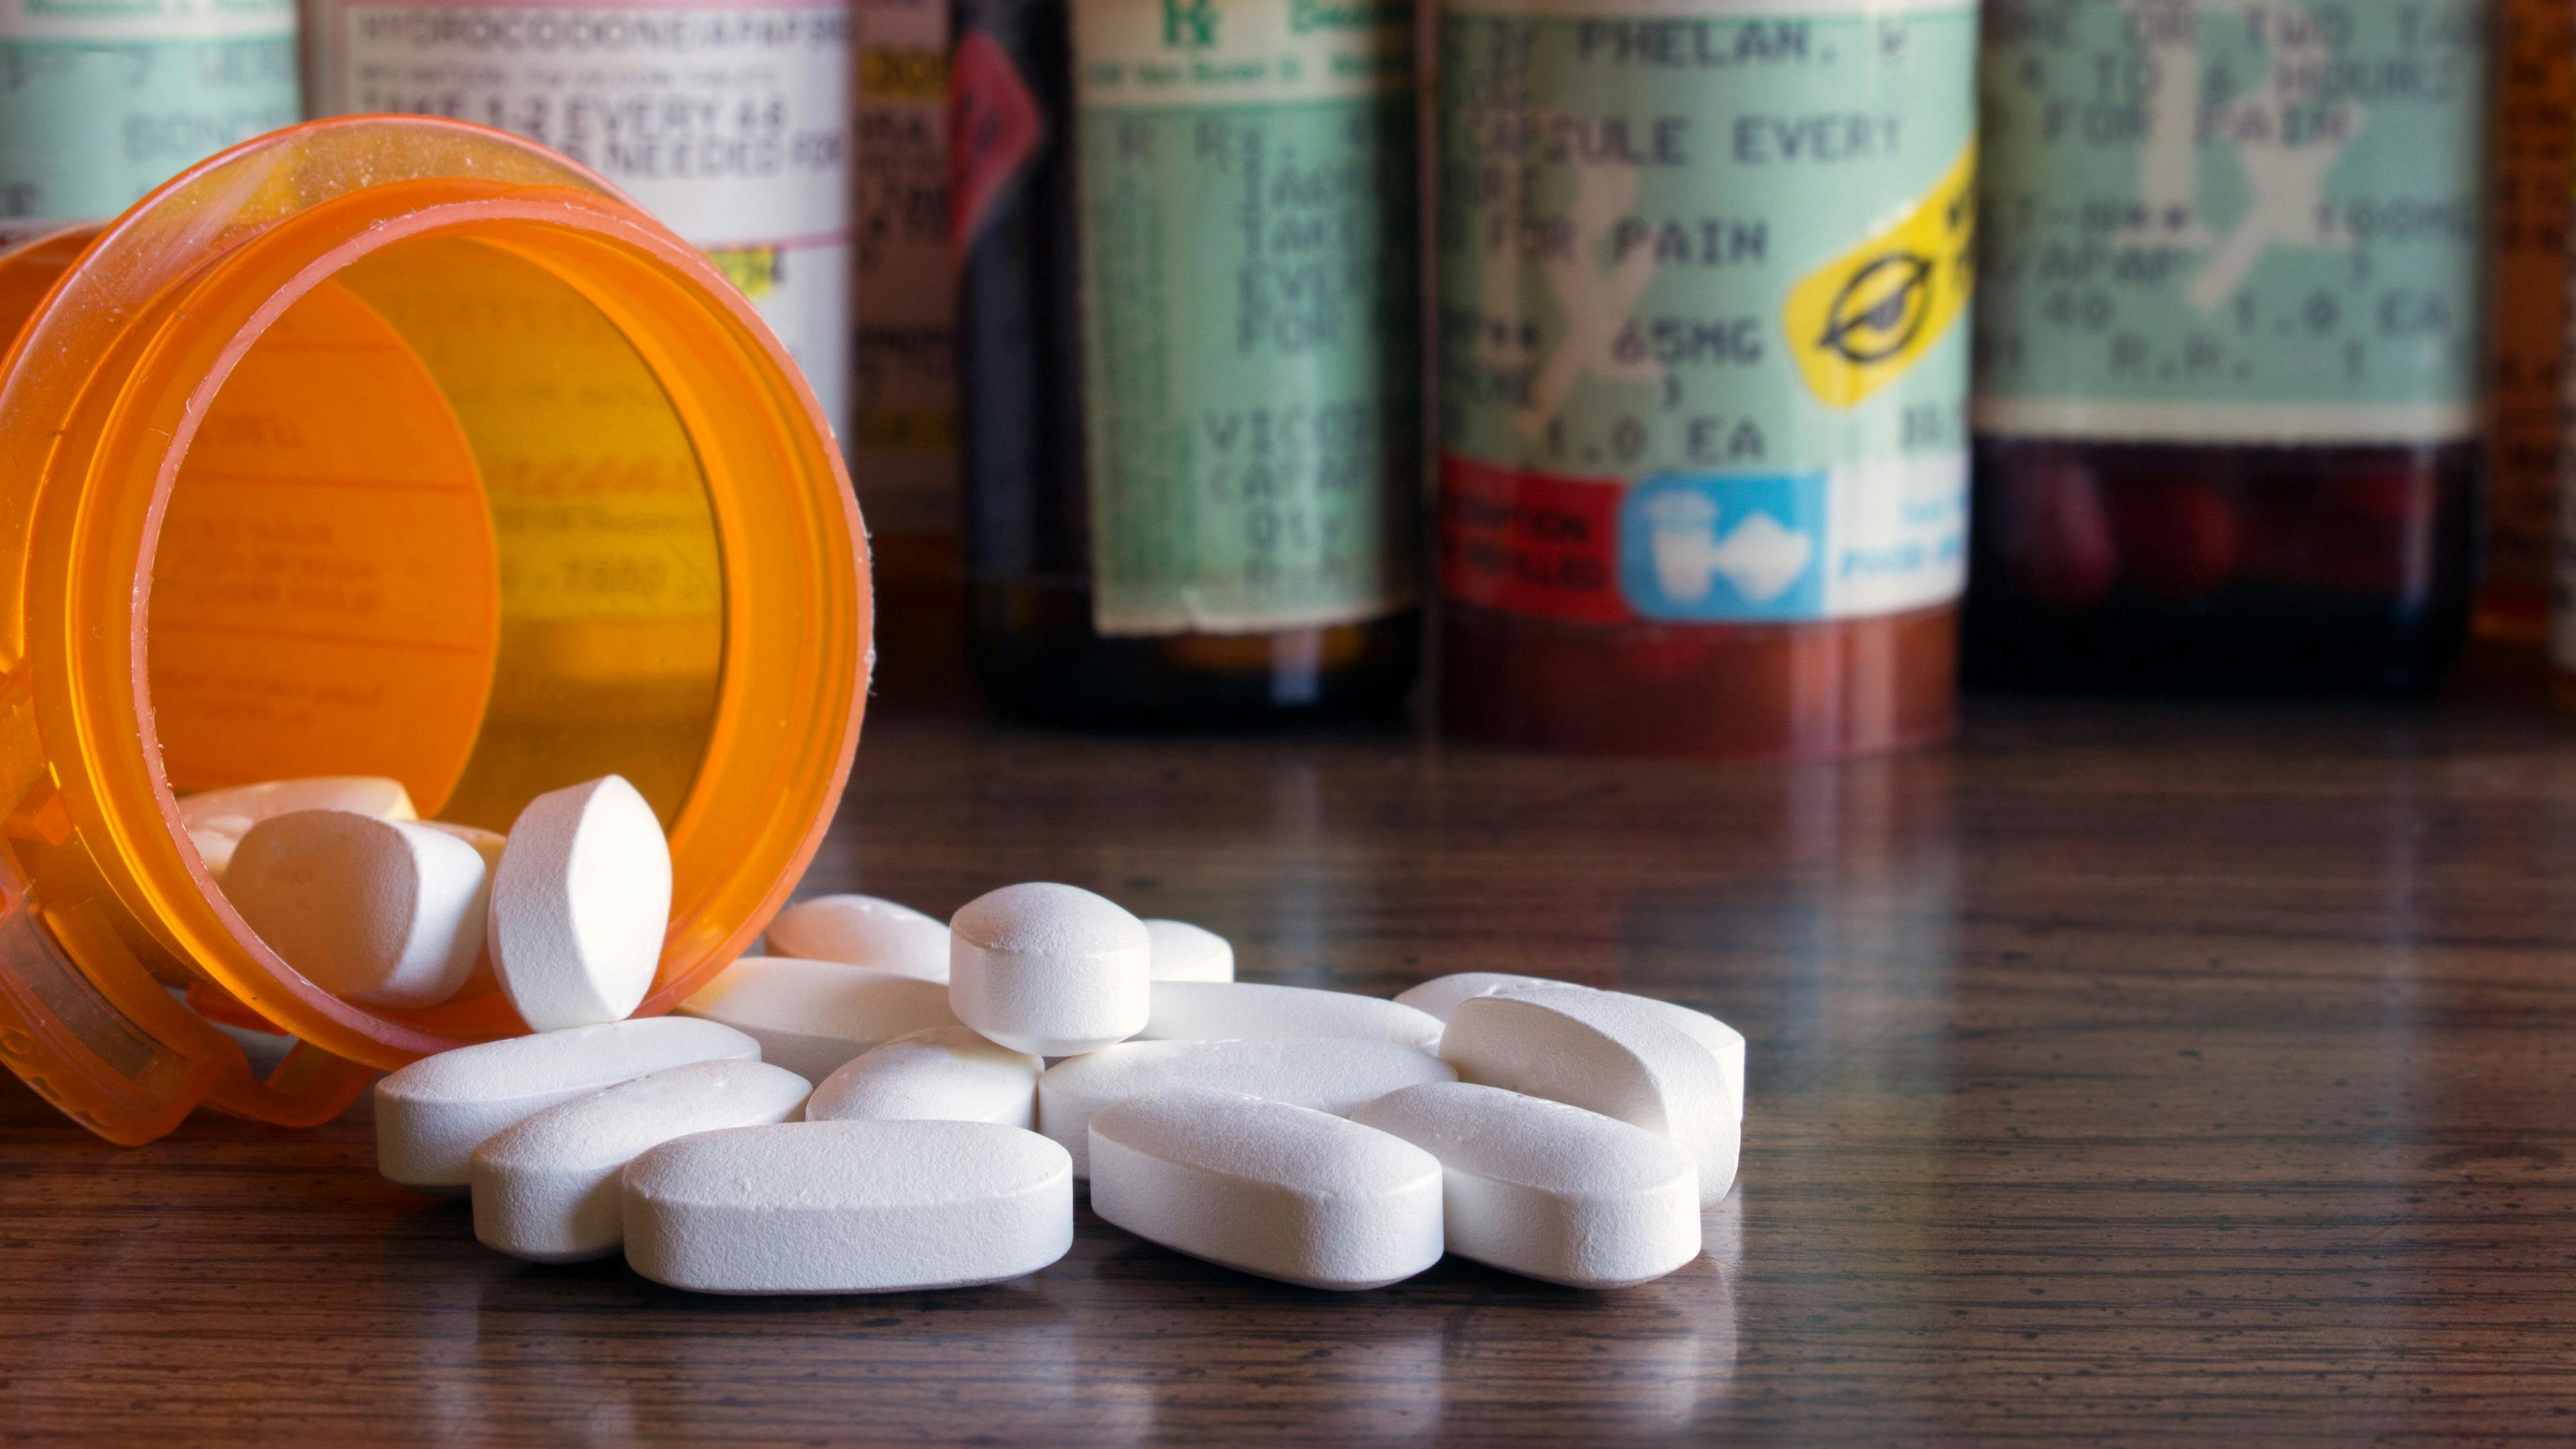 Bottle of prescription opioids | Image credit: Kimberly Boyles - stock.adobe.com